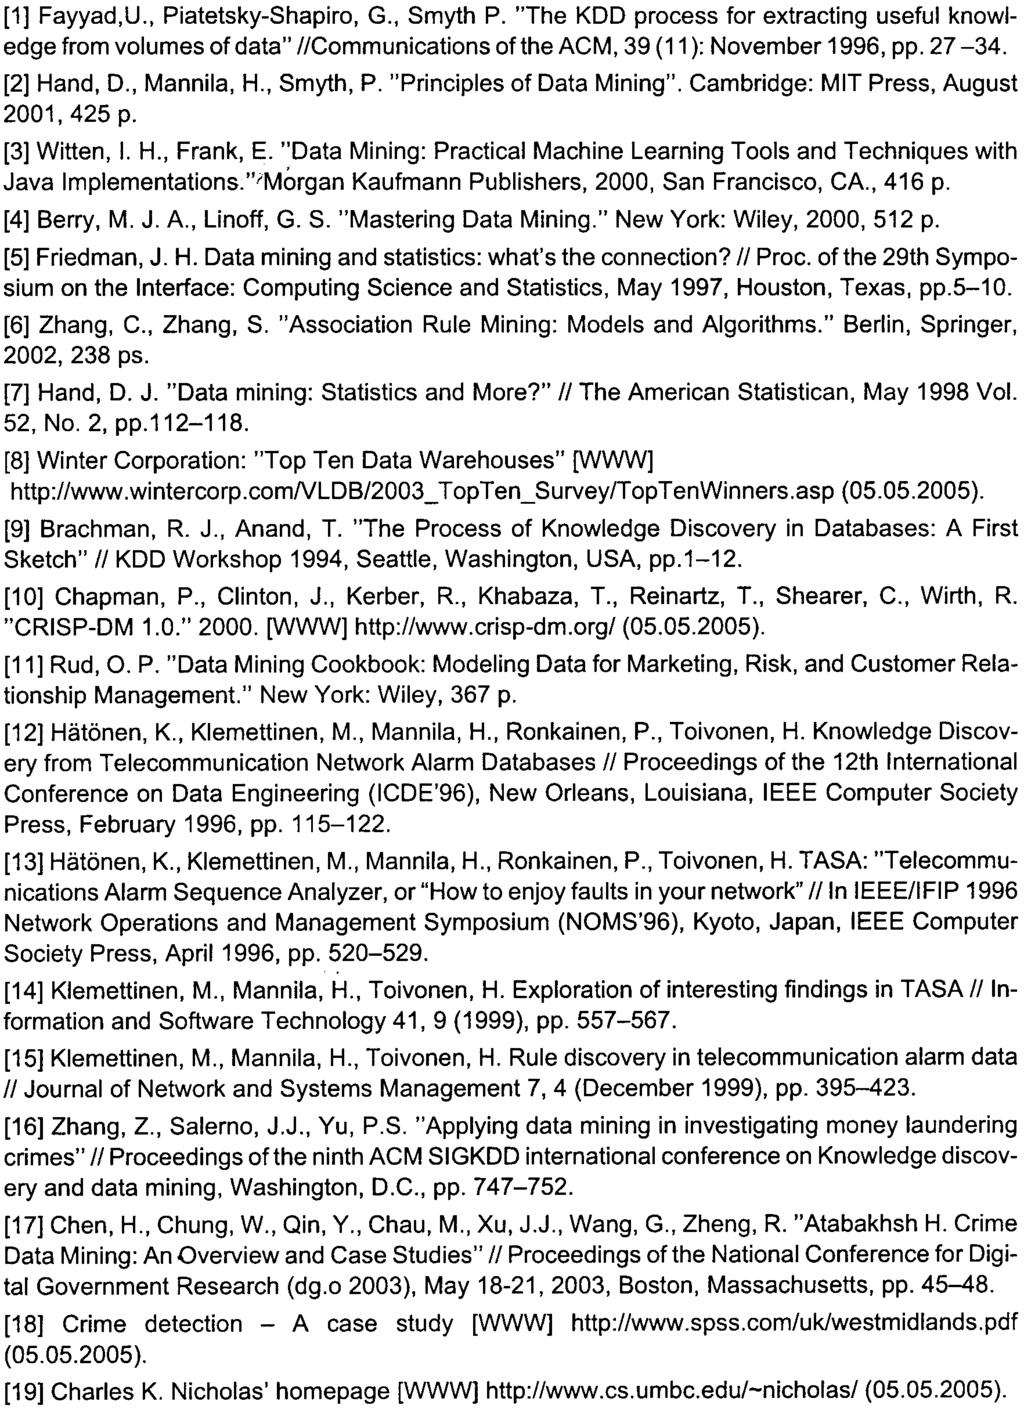 KIRJANDUS [1] Fayyad,U., Piatetsky-Shapiro, G., Smyth P. "The KDD process for extracting useful knowledge from volumes of data" IICommunications of the ACM, 39 (11): November 1996, pp. 27-34.